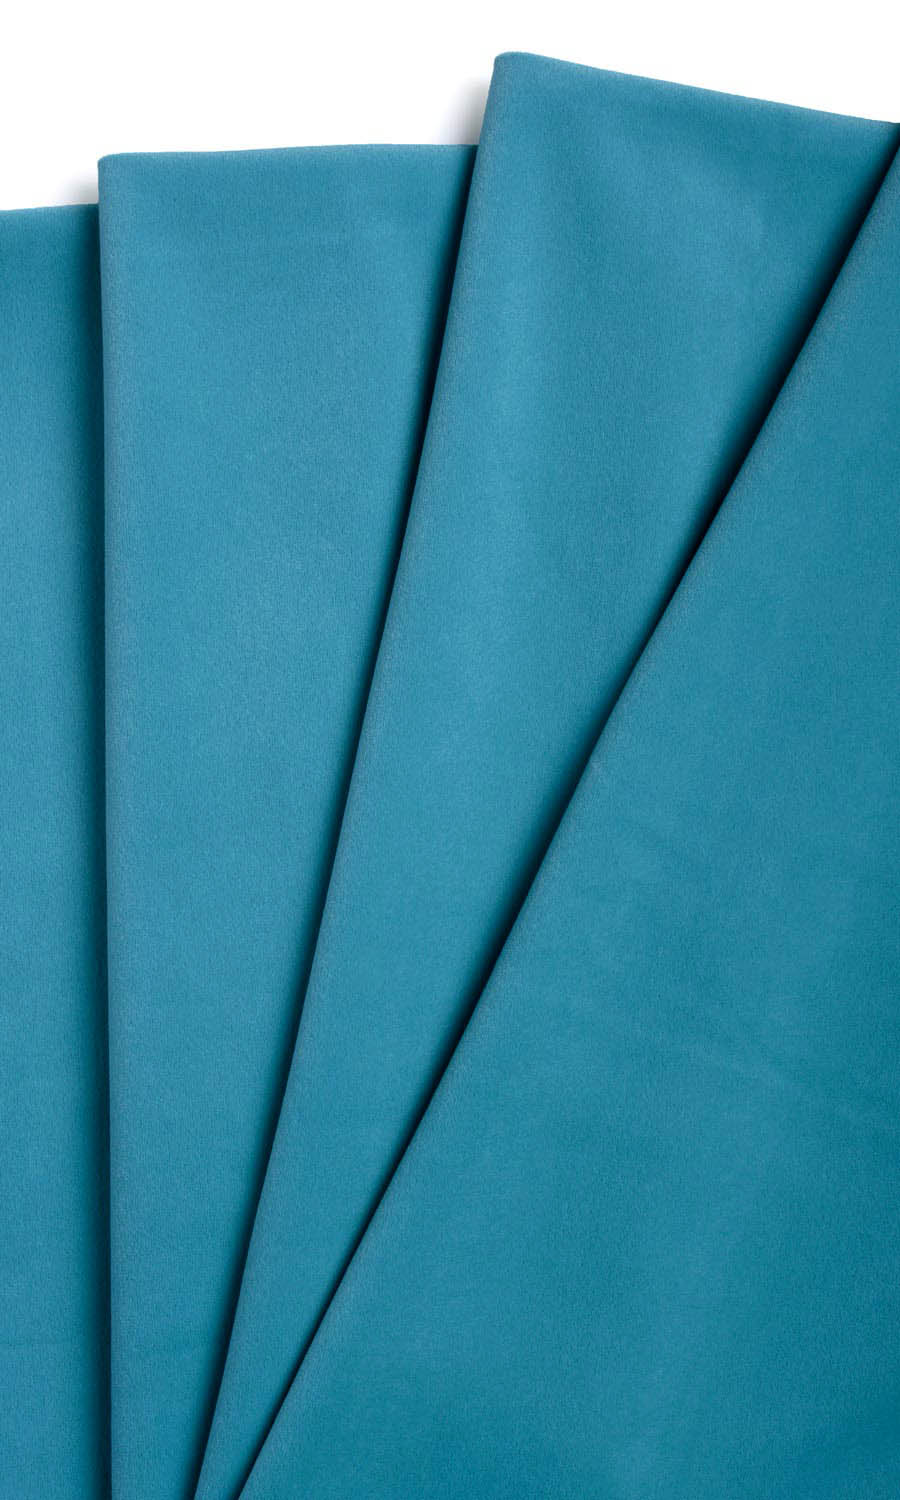 Blue Ivy' Fabric by the Yard (Cerulean Blue) – Spiffy Spools